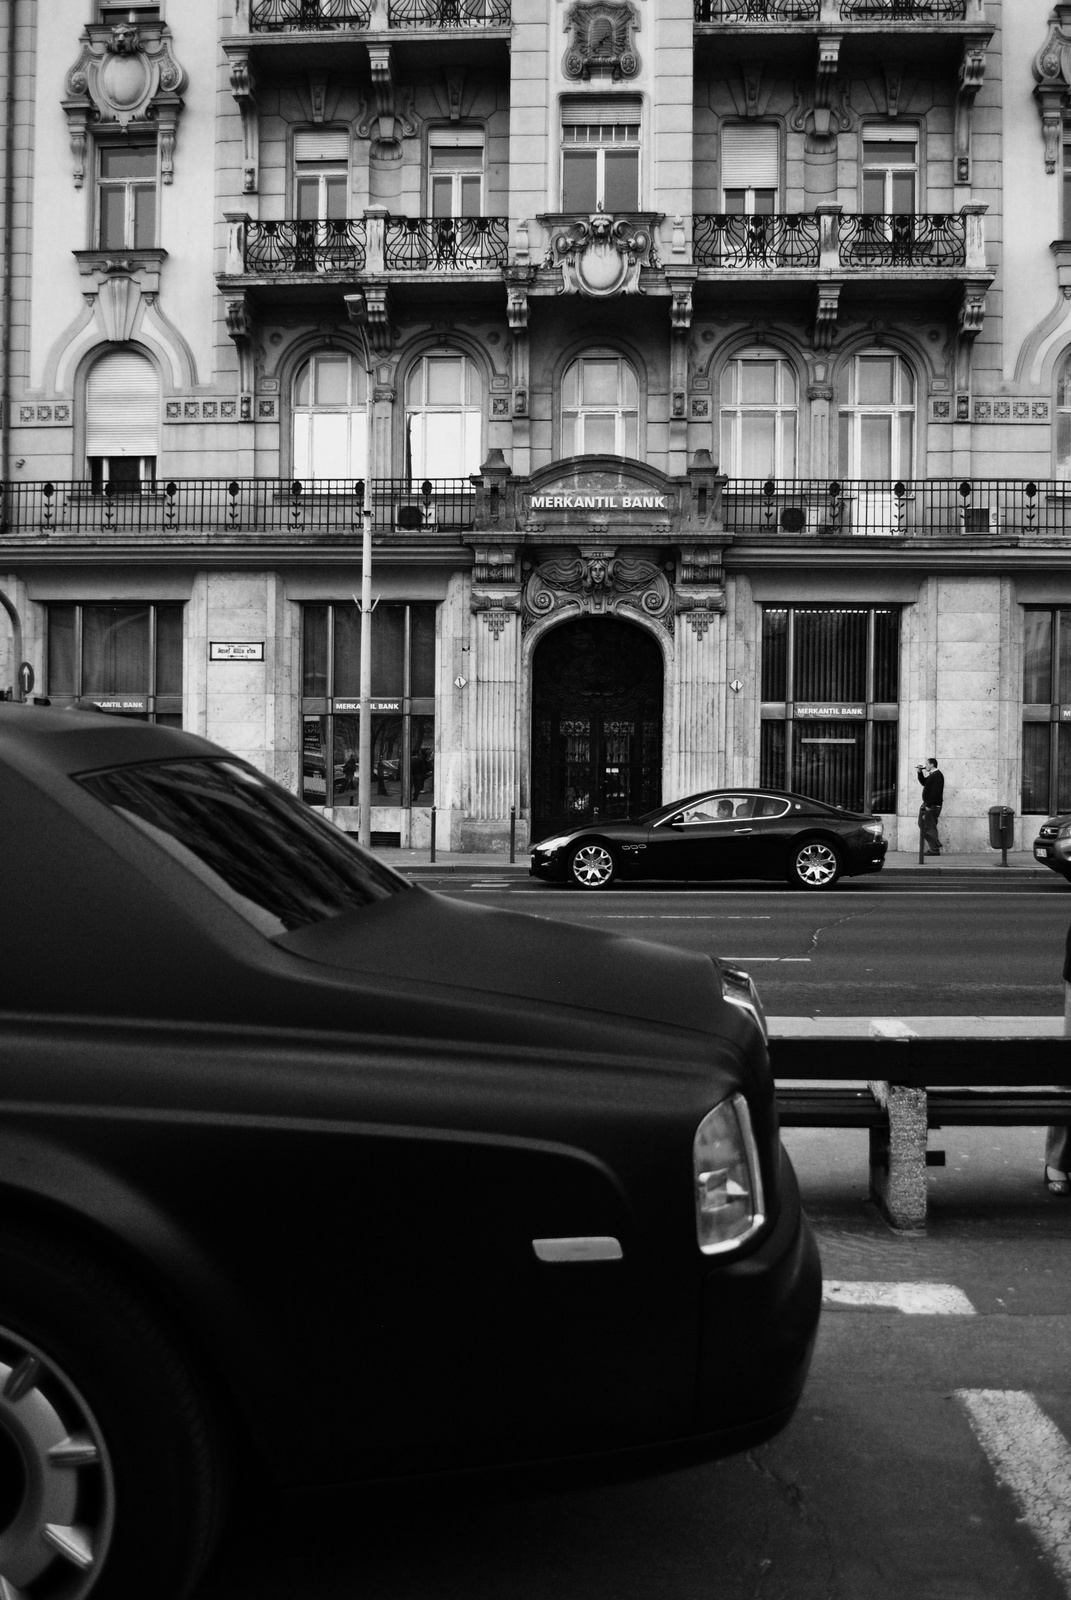 Rolls Royce Phantom - Maserati GranTurismo